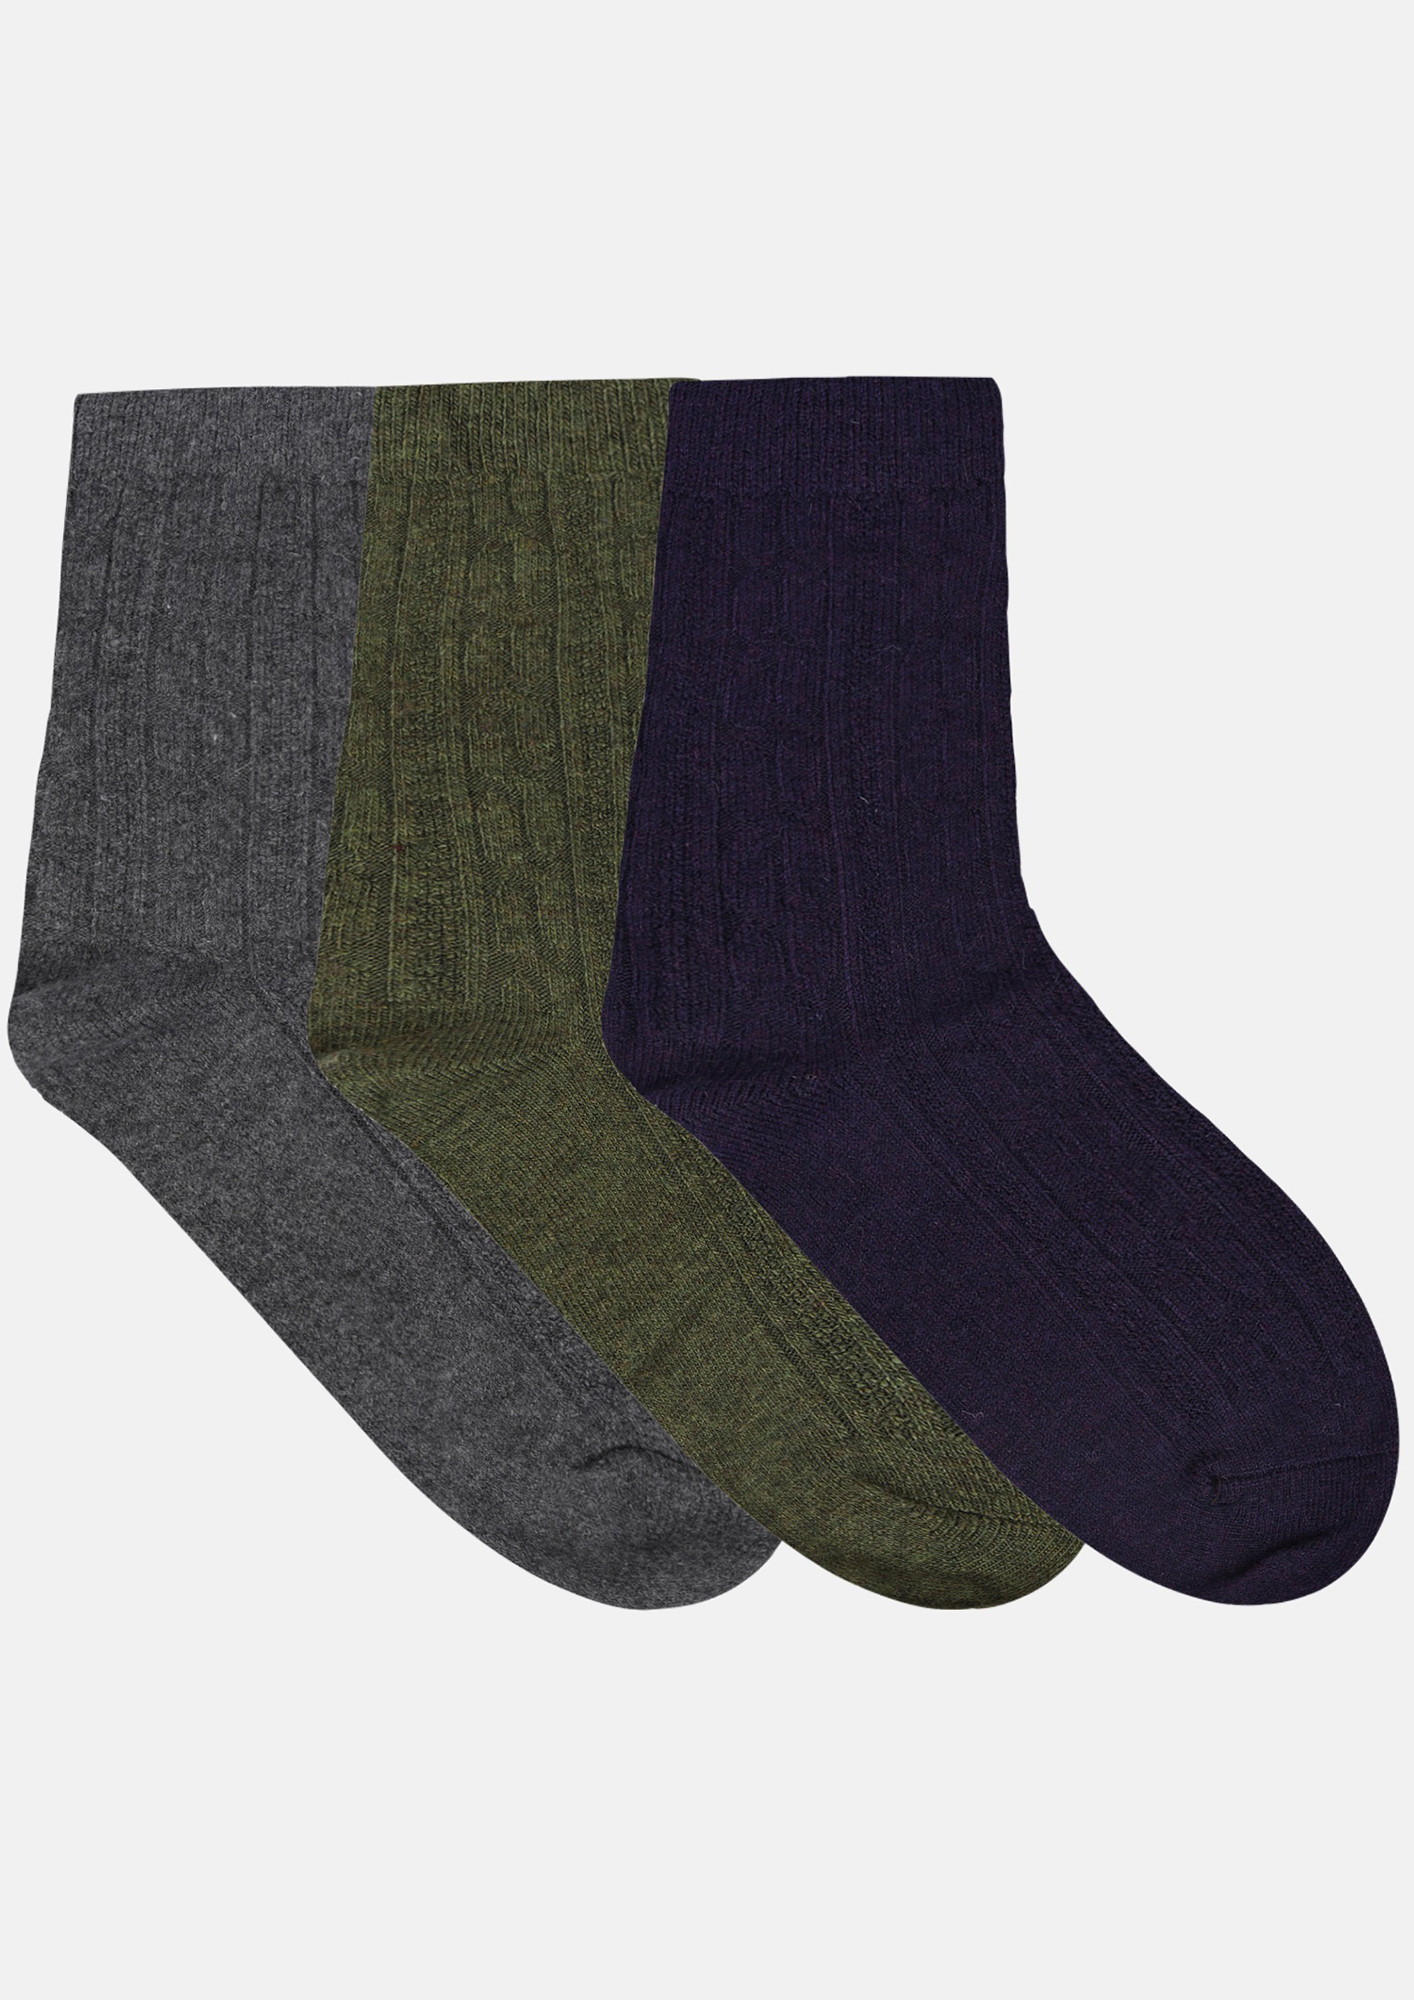 NEXT2SKIN Women's Woollen Regular length Socks (Pack of 3) (Dark Grey,Green,Navy Blue)